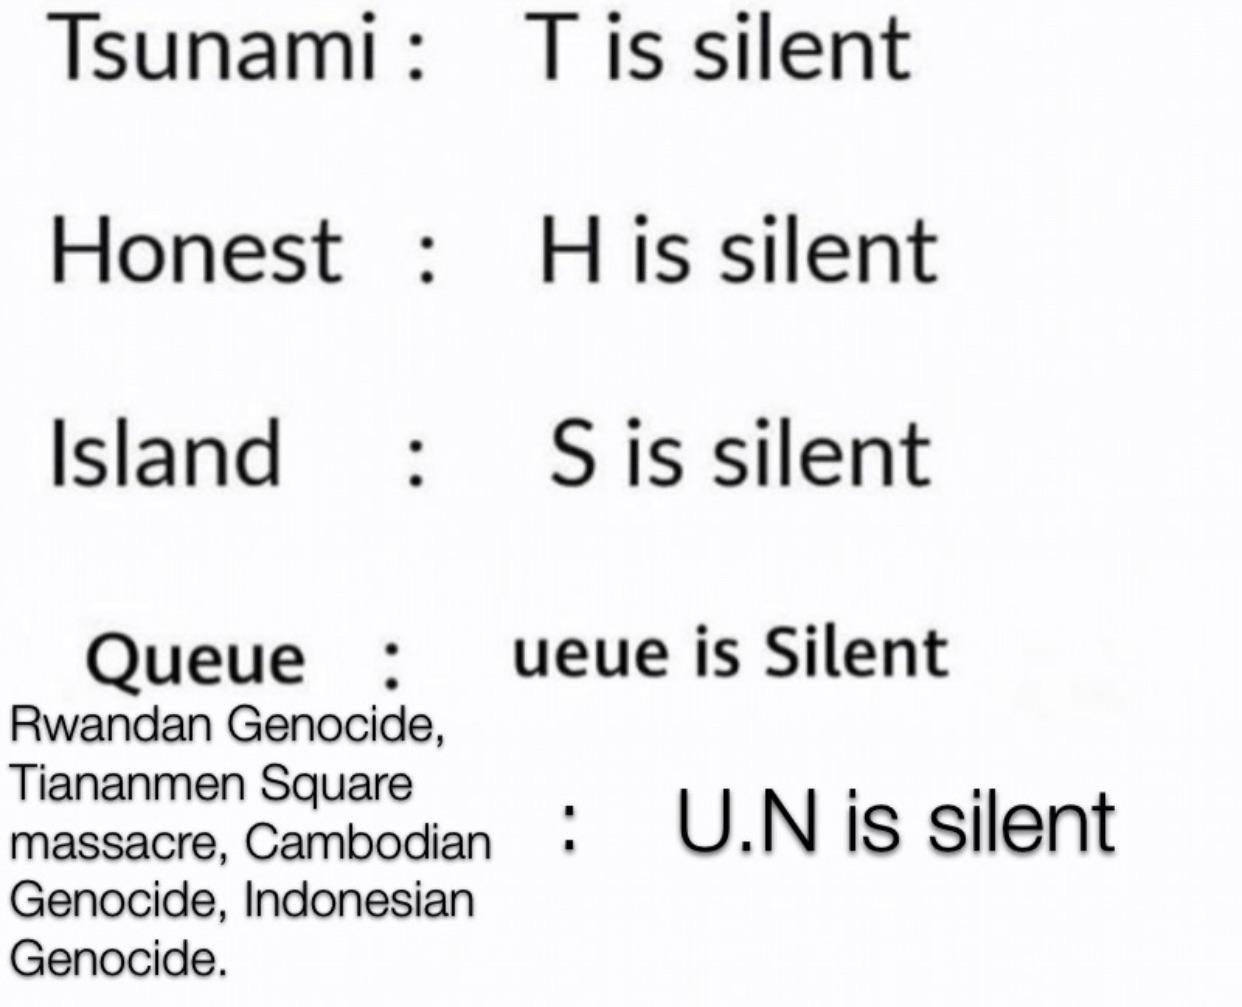 document - Tsunami T is silent Honest His silent Island S is silent Queue ueue is Silent Rwandan Genocide, Tiananmen Square massacre, Cambodian Genocide, Indonesian Genocide. U.N is silent